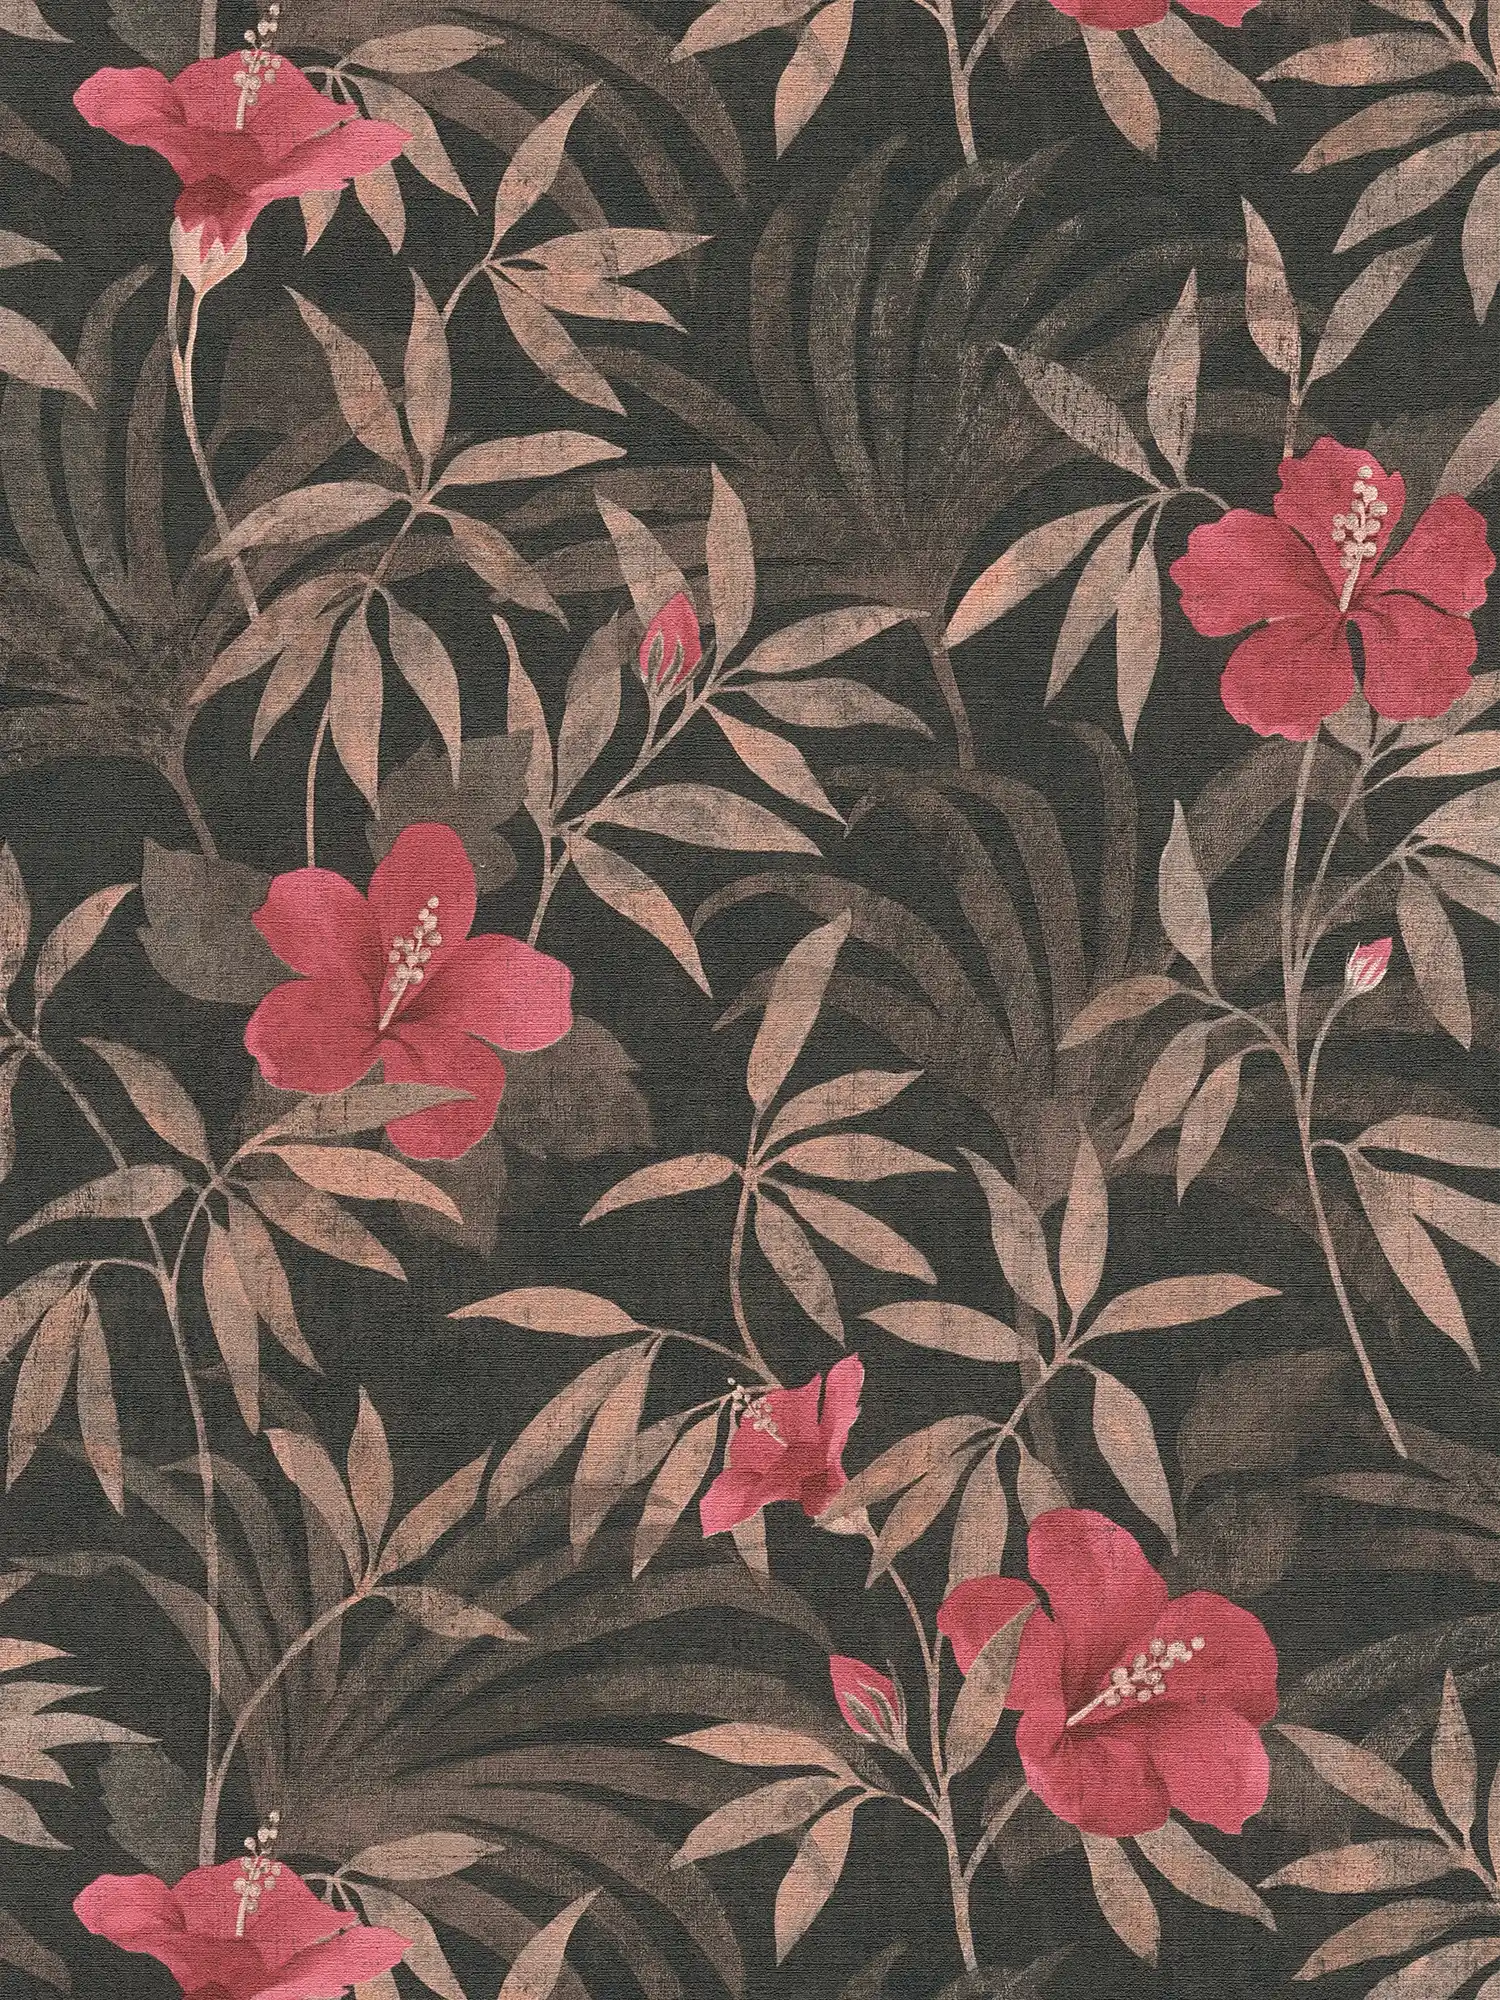 Tapete Dschungel Blätter & Hibiskus Blüten – Braun, Rot
